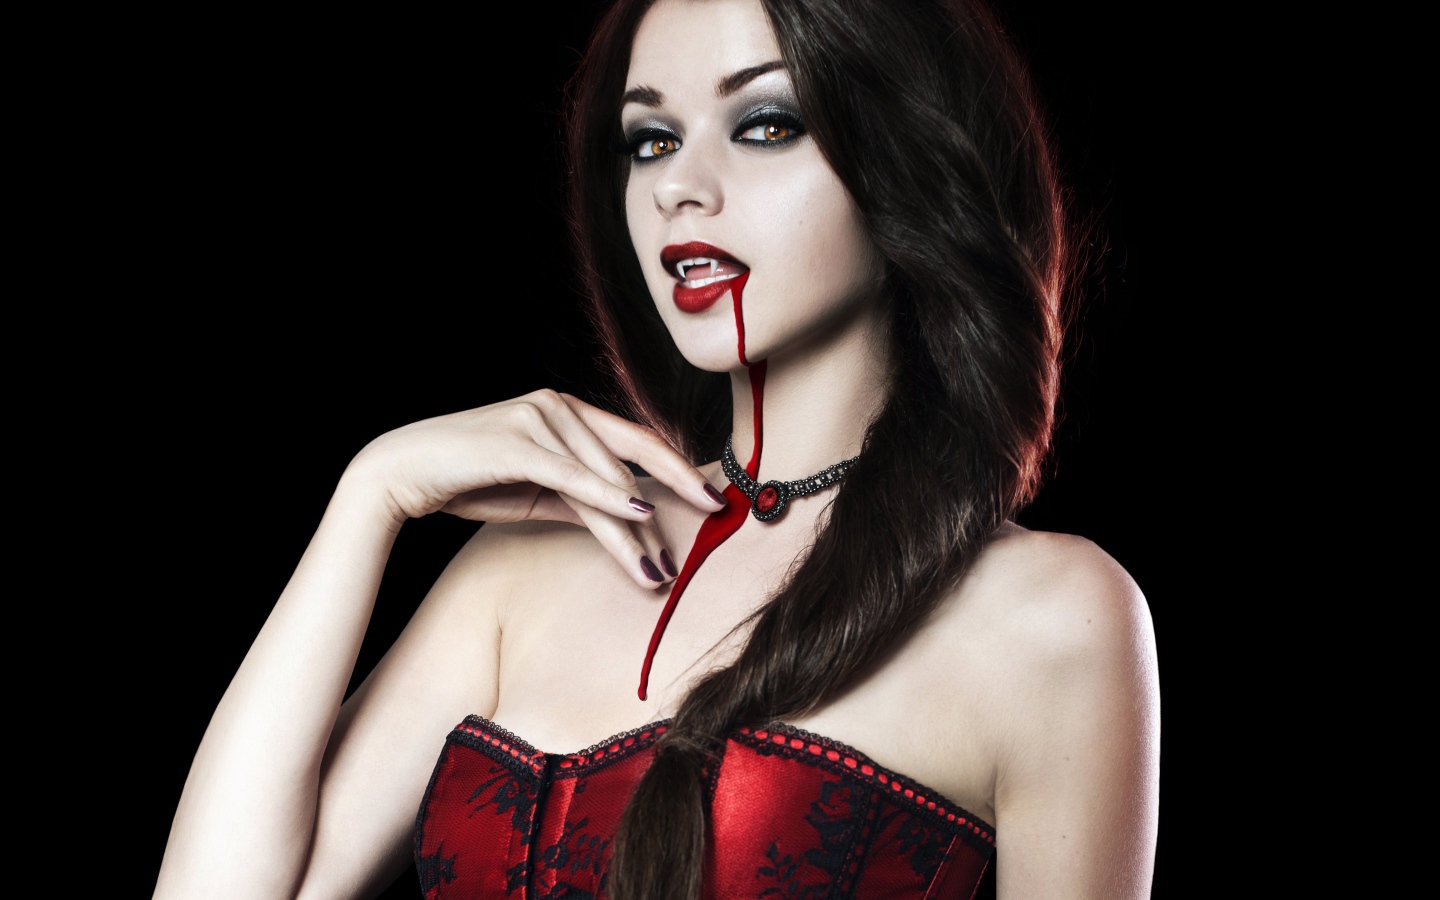 Довольная девушка вампир